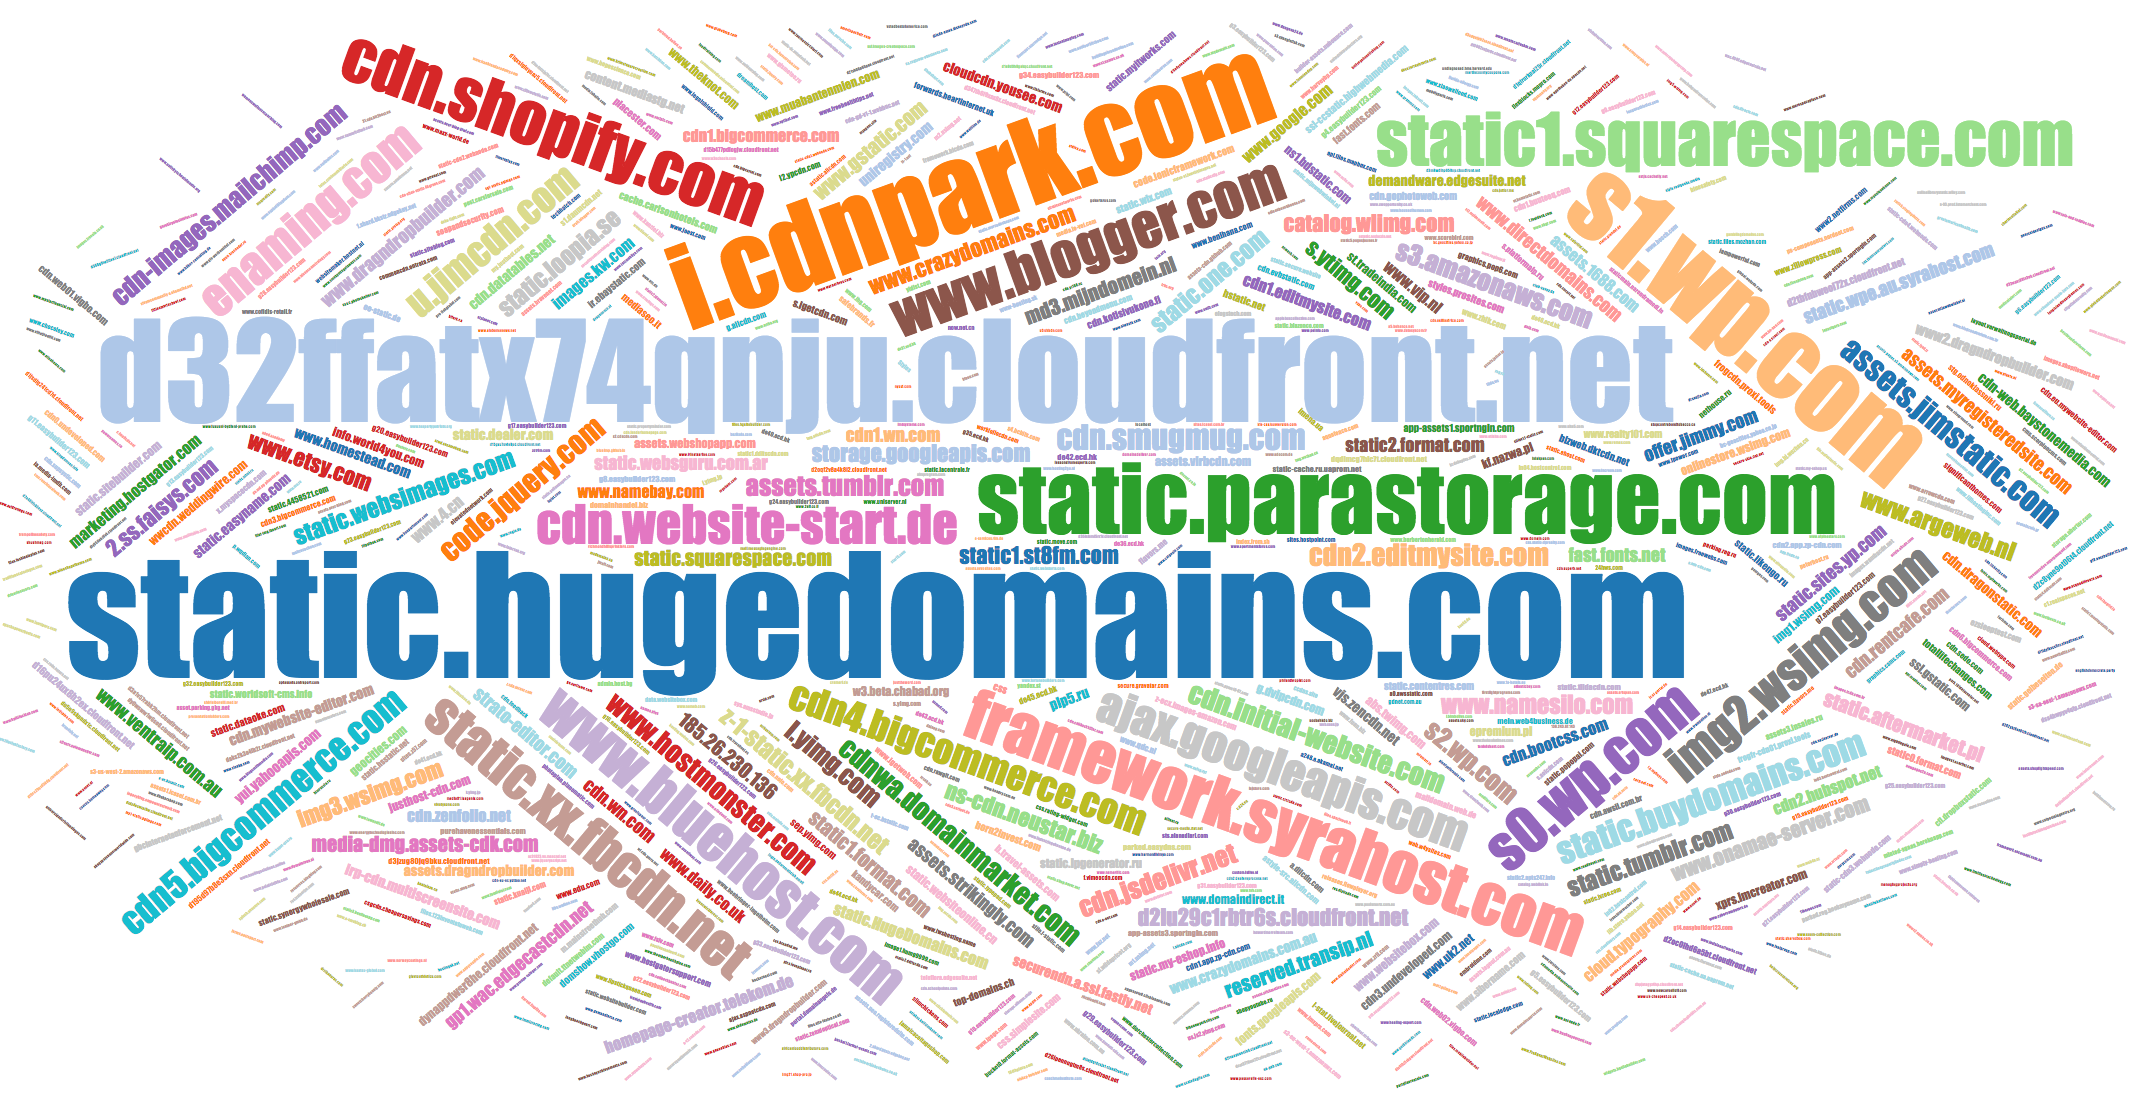 Popular names of CSS domains gp1.wac.edgecastcdn.net, g.alicdn.com, etc.